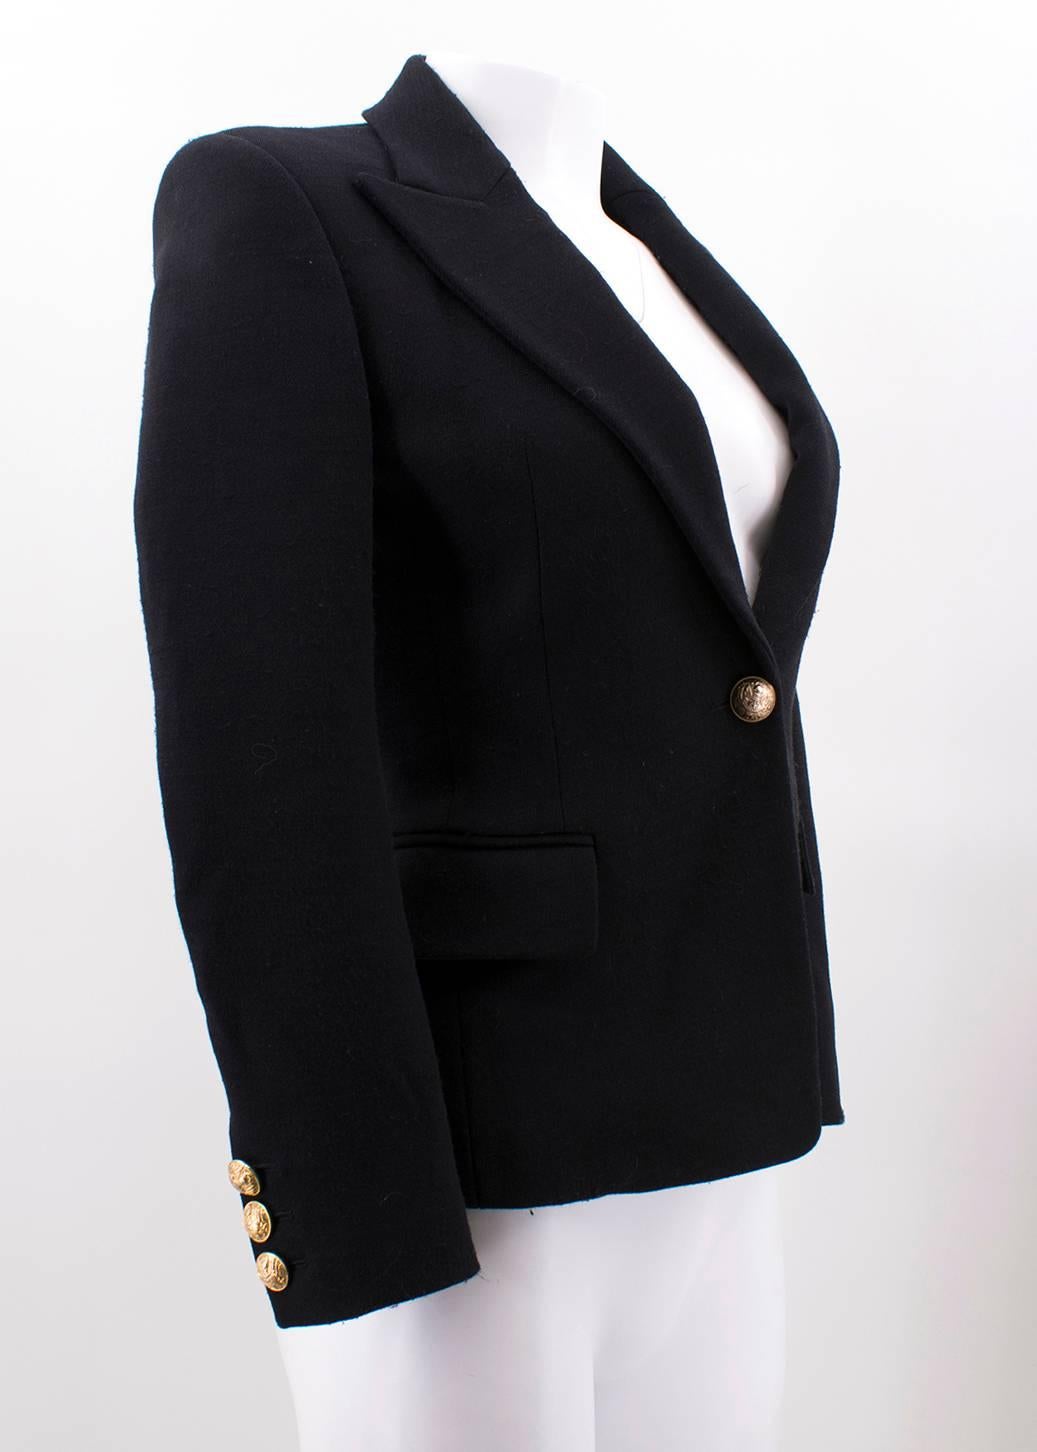 Balmain Black Single Breasted Blazer Jacket For Sale 3